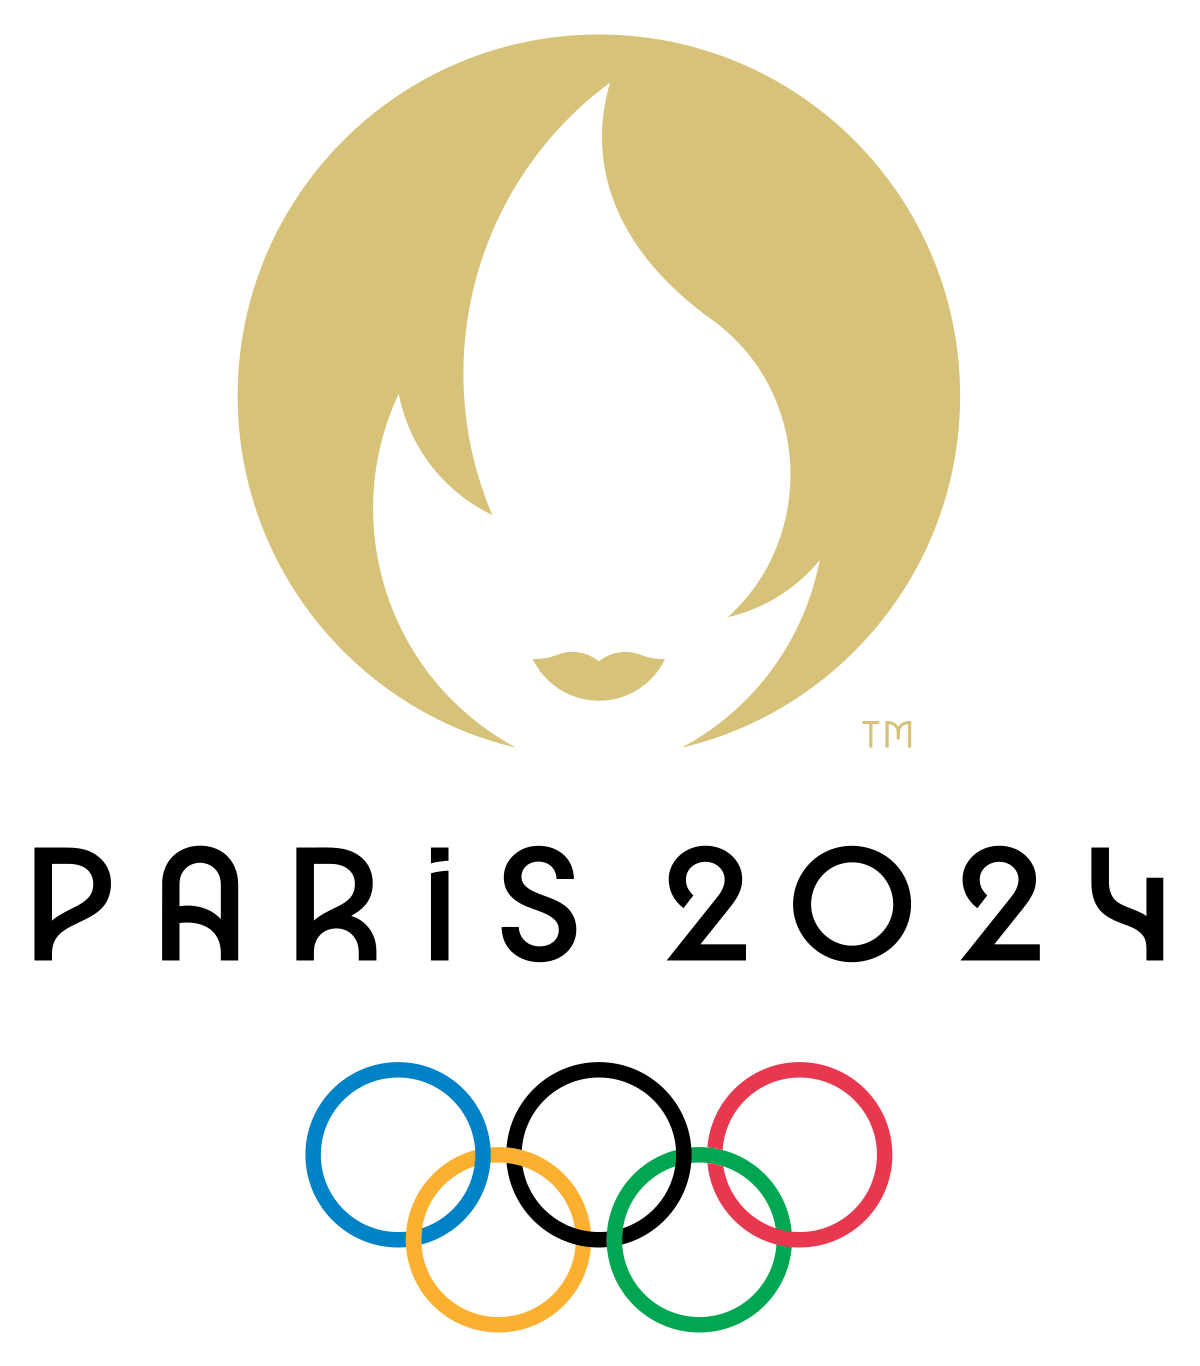 Paris 2024 Olympics Logo PNG HD Images